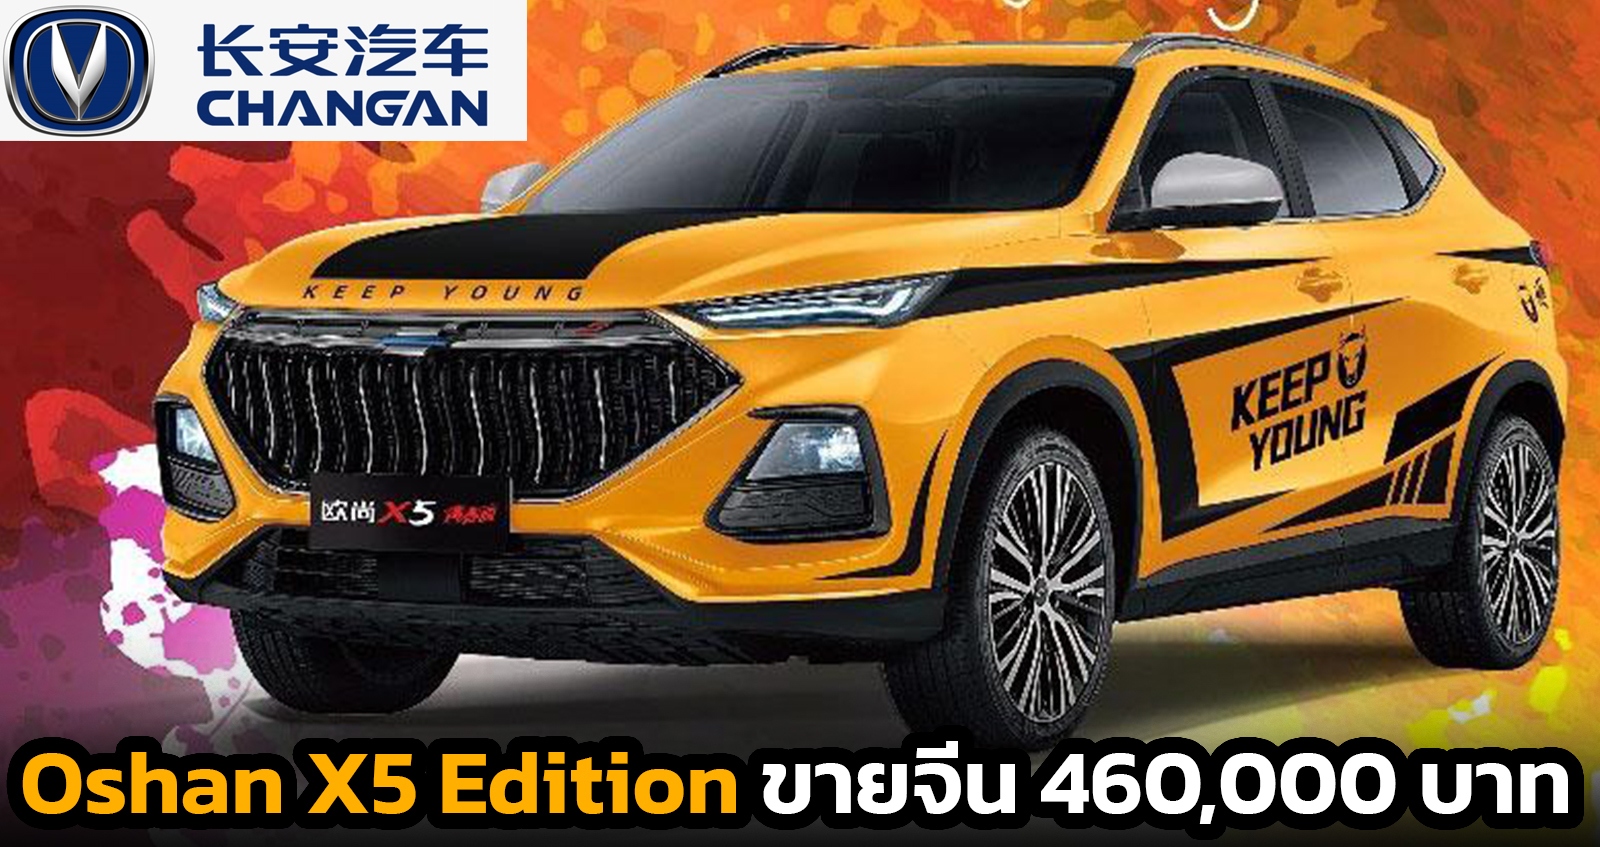 Changan Oshan X5 Edition เปิดราคา 460,000 บาทในจีน ขายเพียง 996 คัน